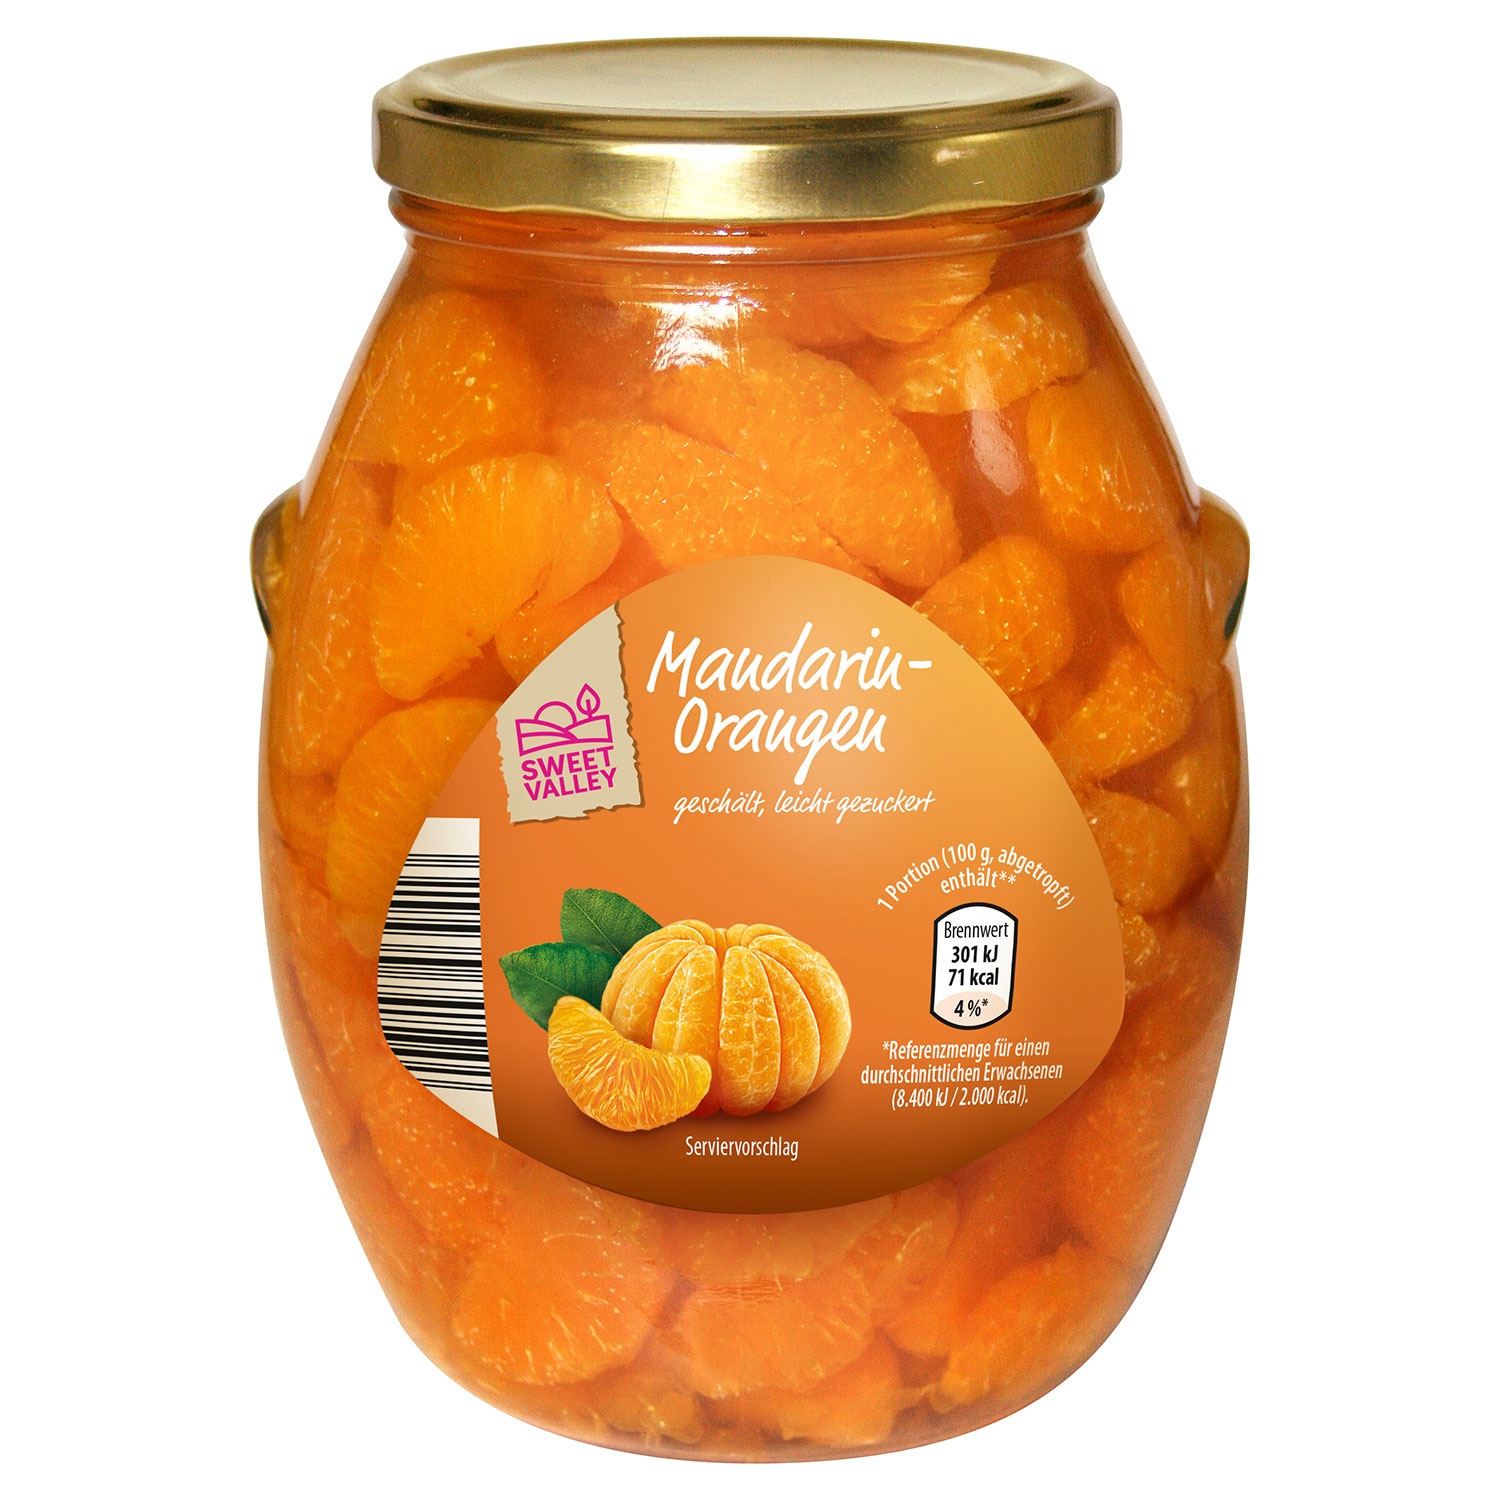 SWEET VALLEY Mandarin-Orangen 1 kg